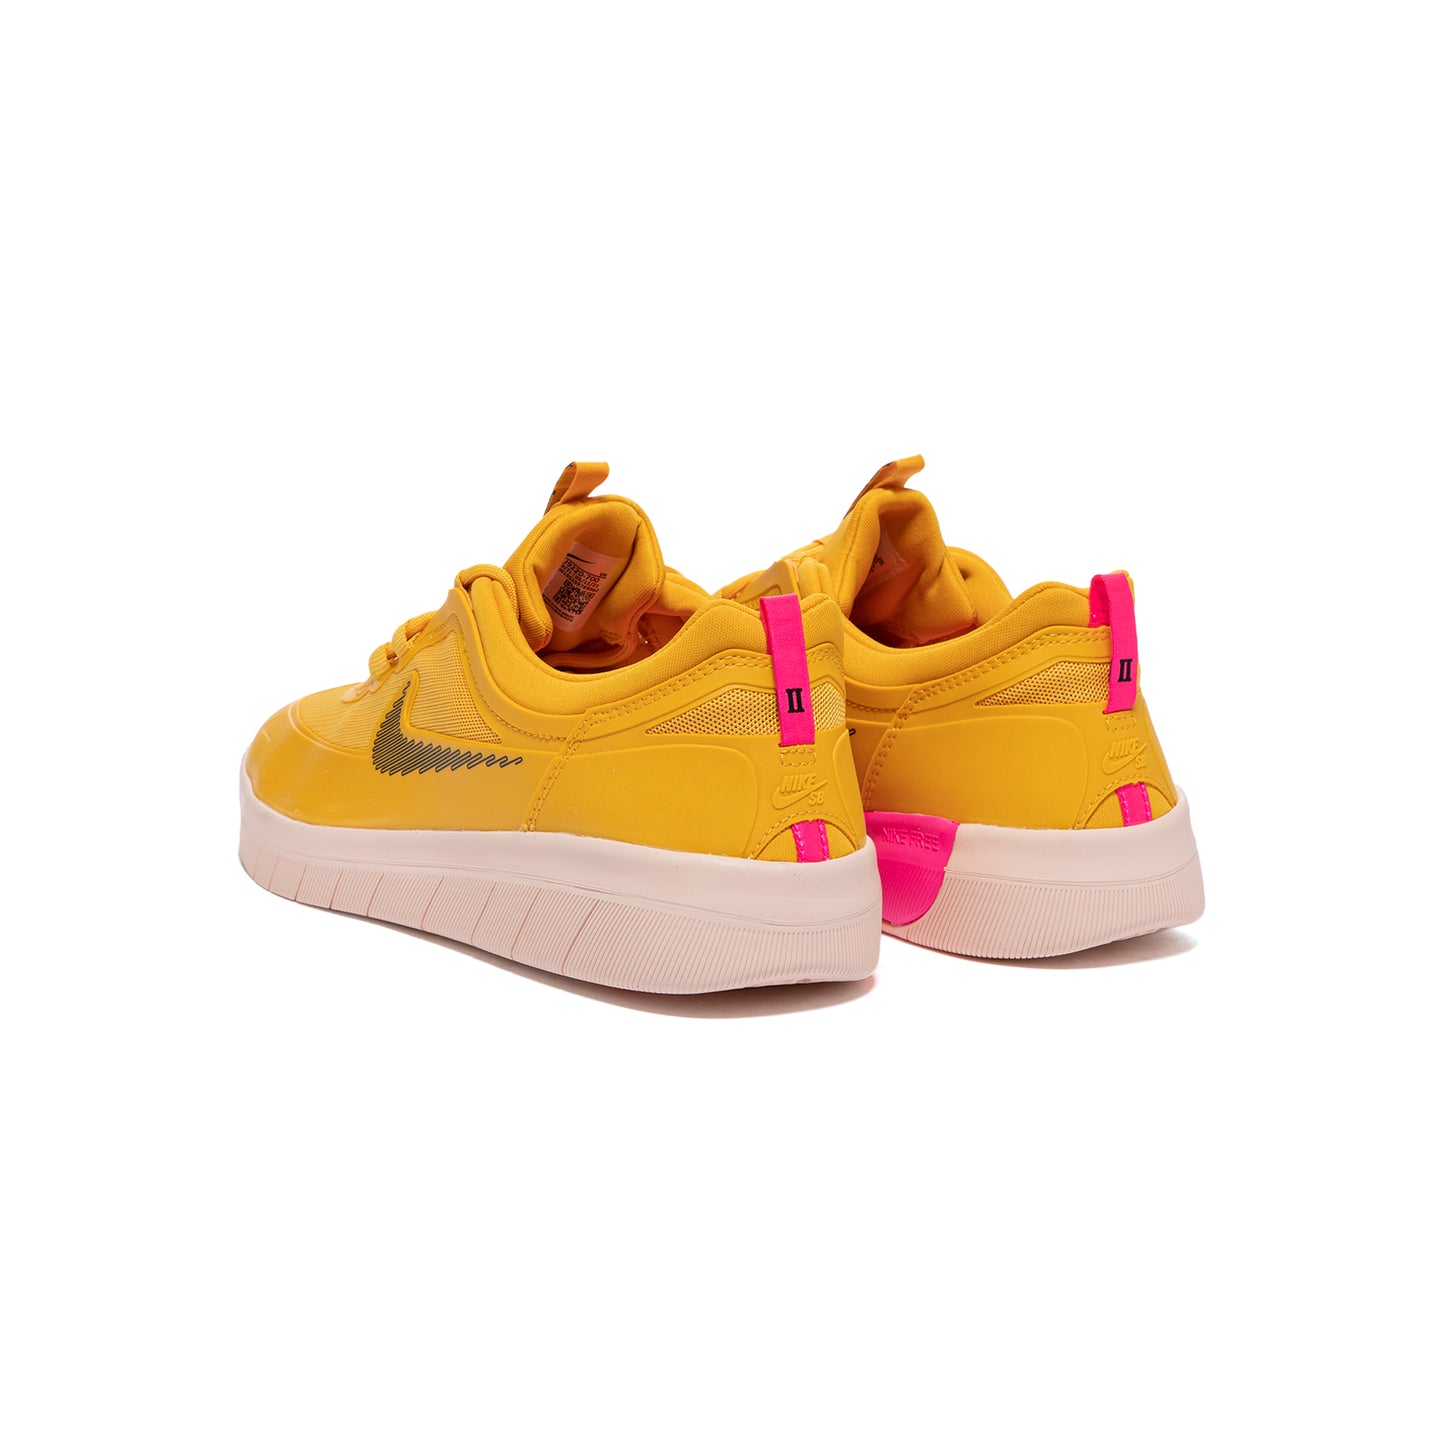 Nike SB Nyjah Free 2 (Pollen/Black/Pink Blast)